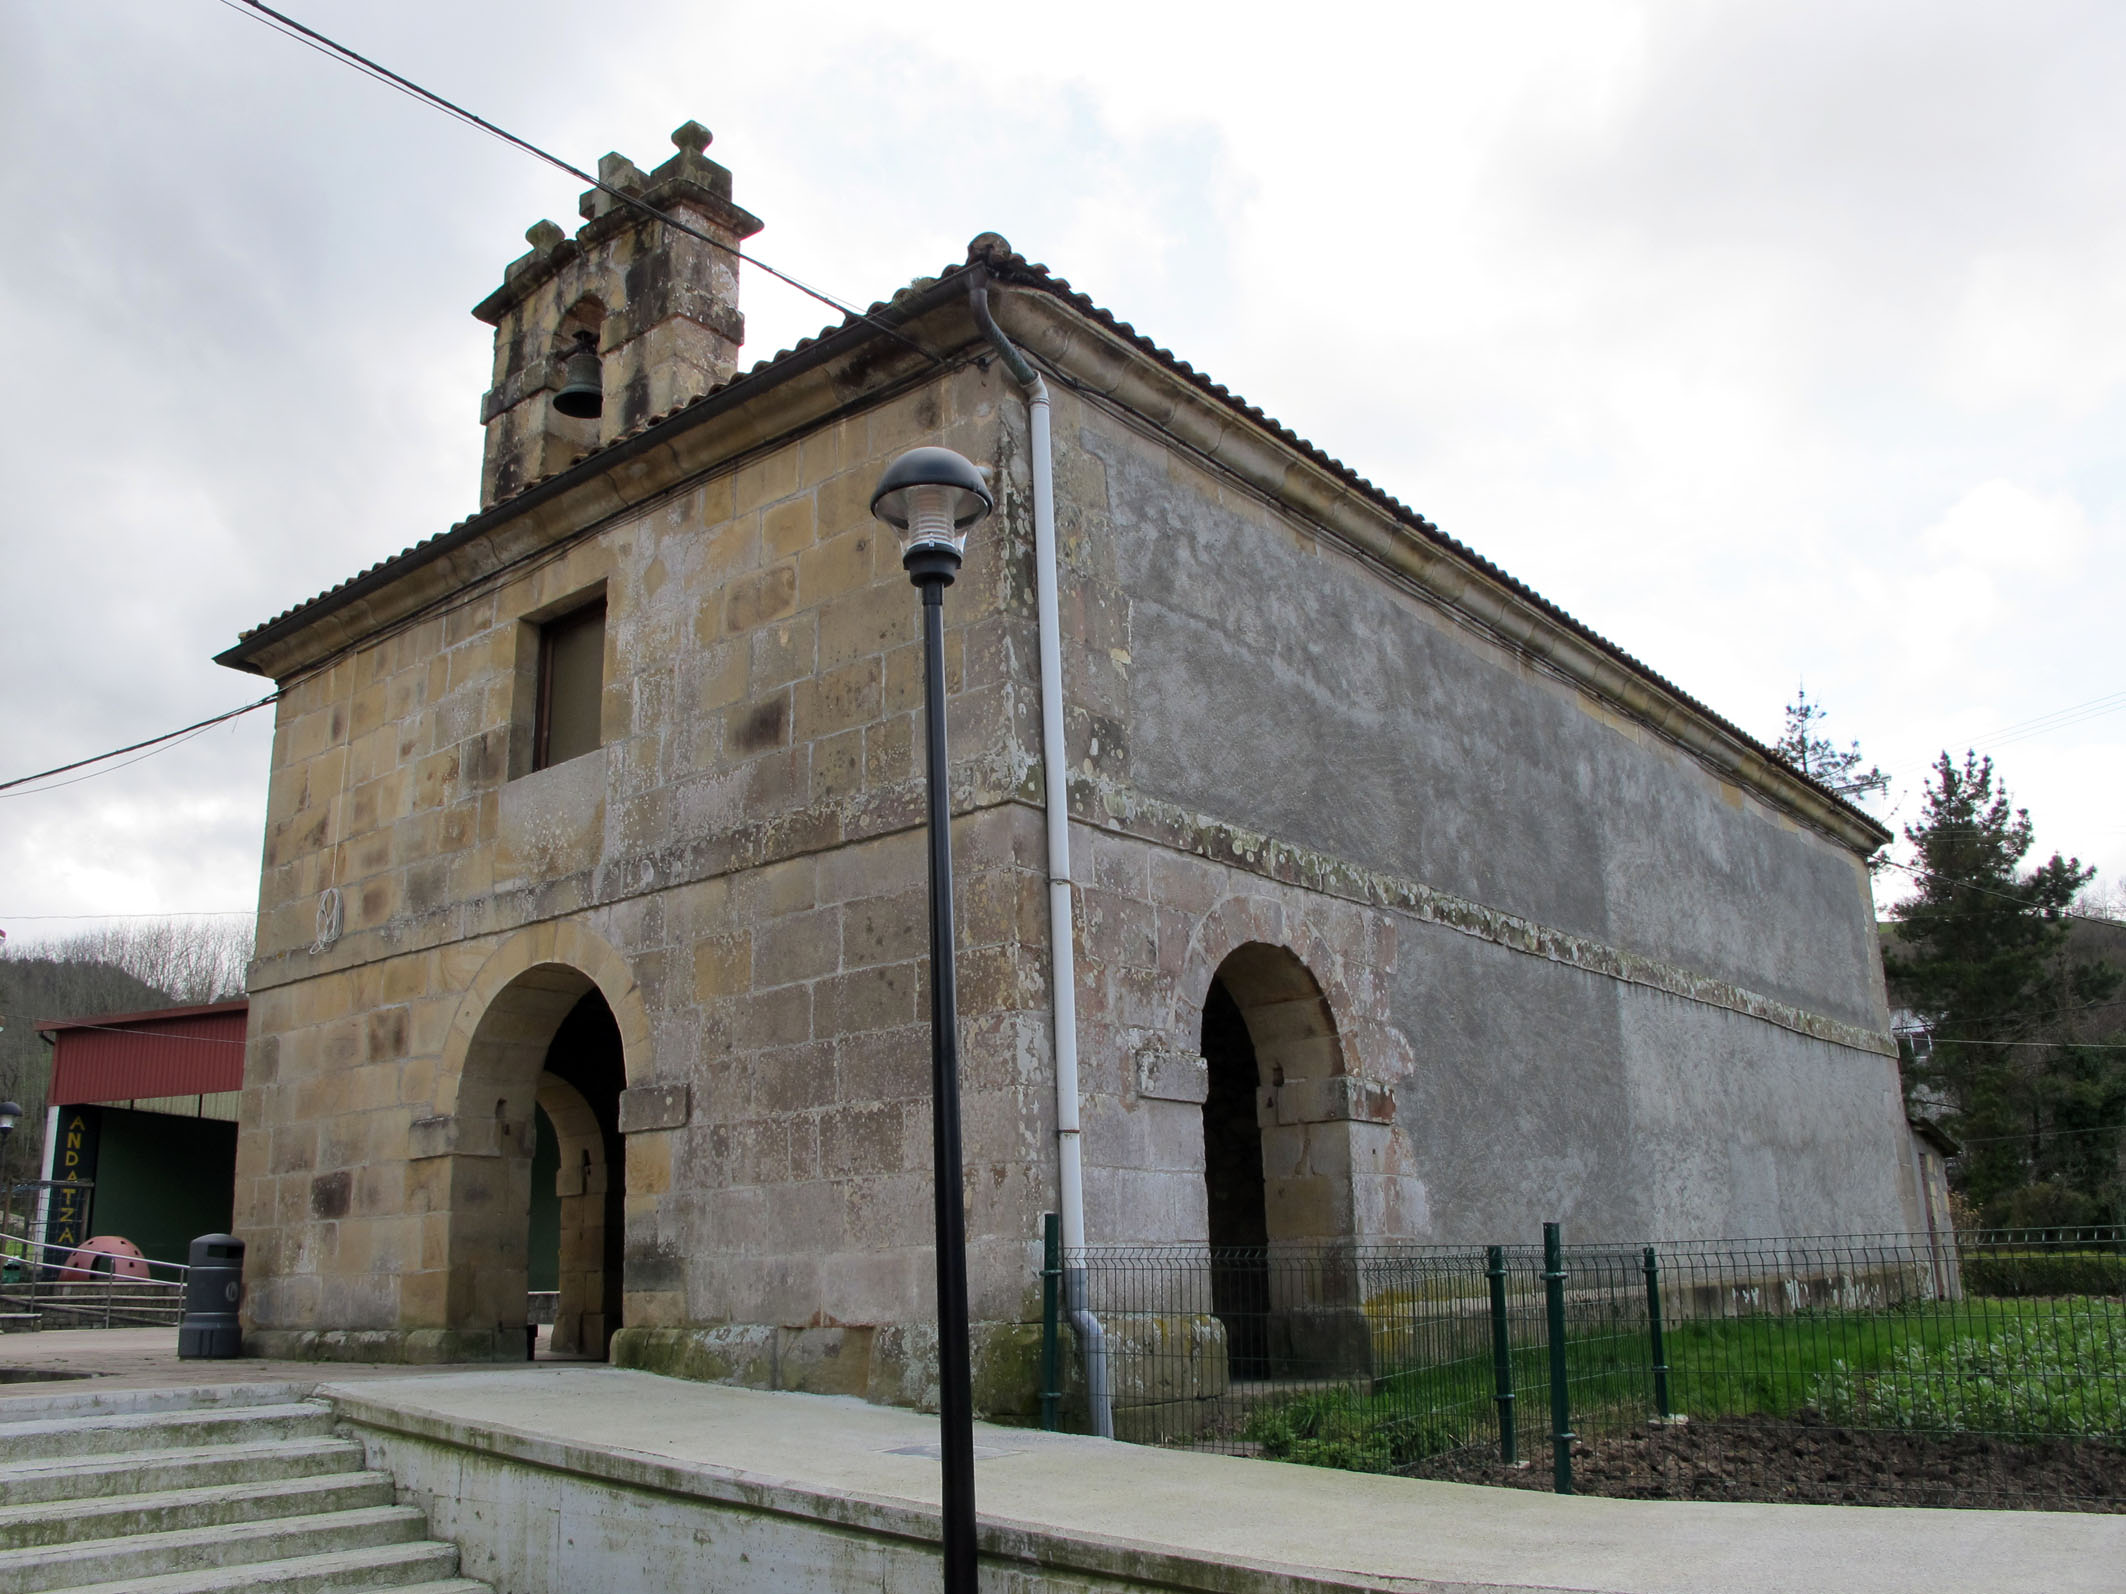 San Pedro ermita Aian